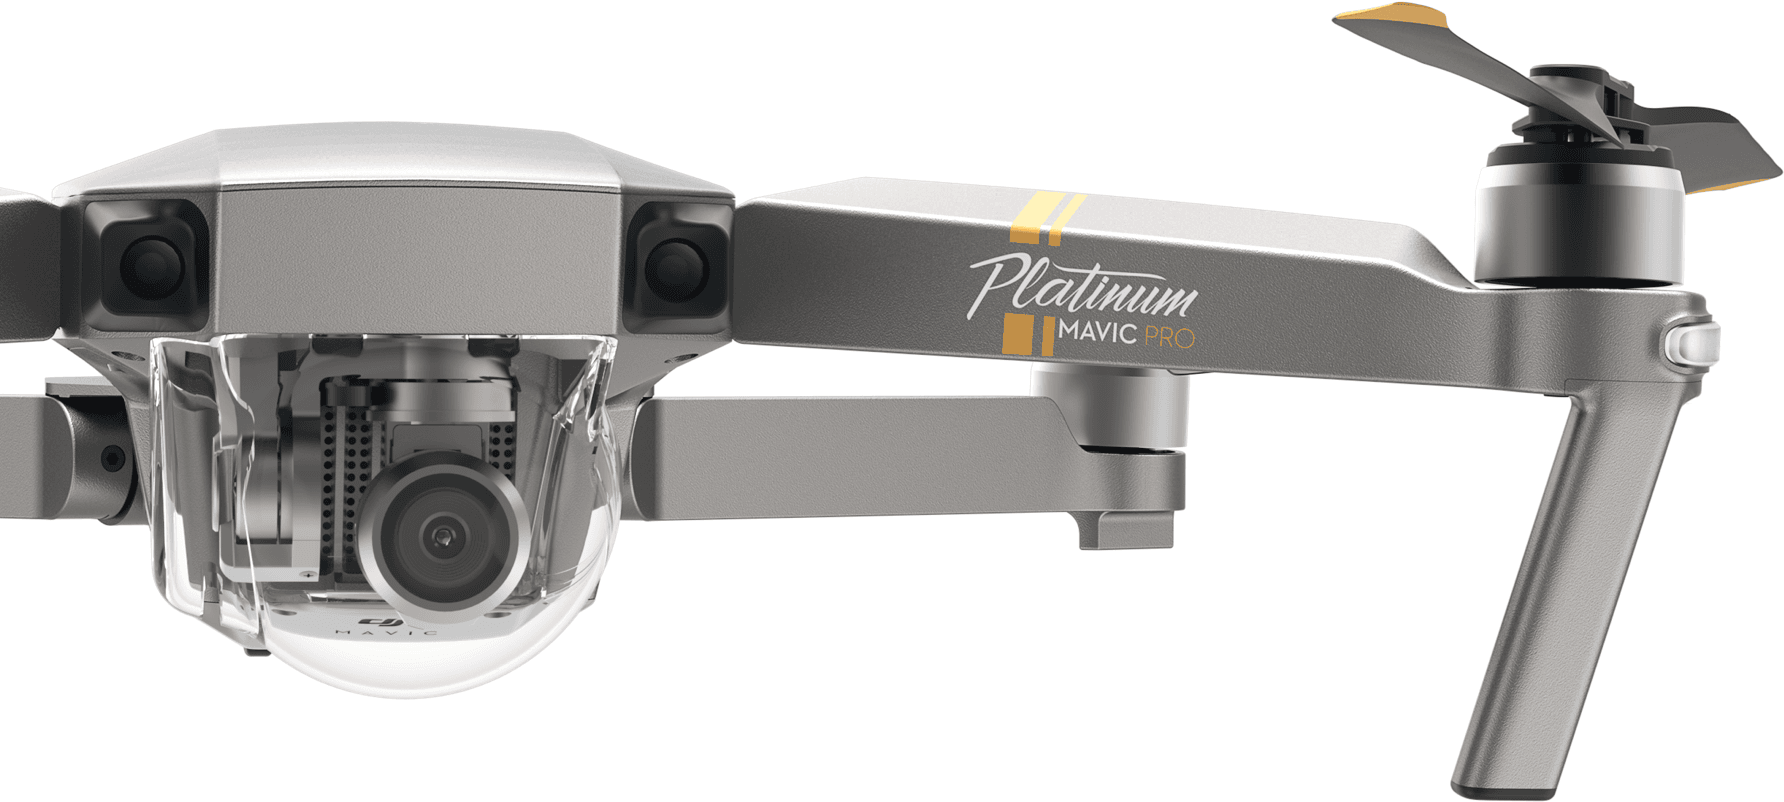 DJI Drone Mavic PRO Platinum